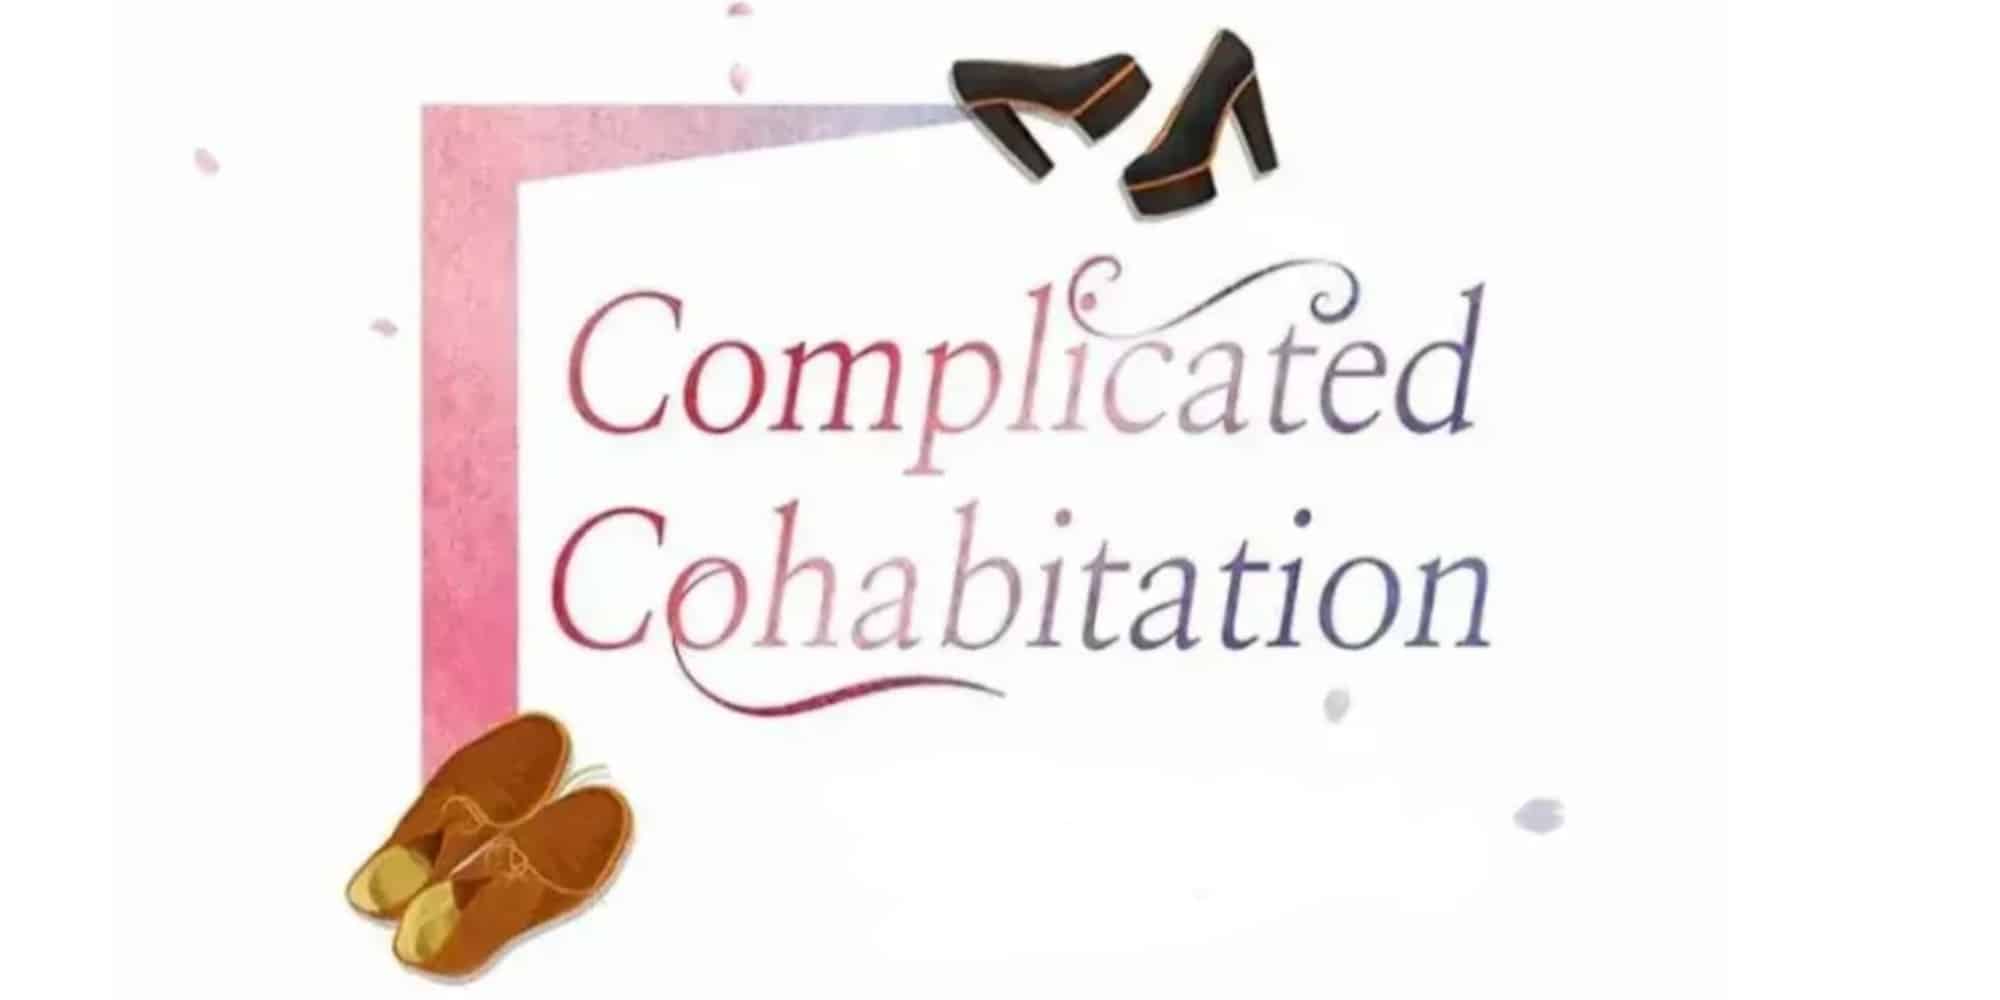 Complicated Cohabitation